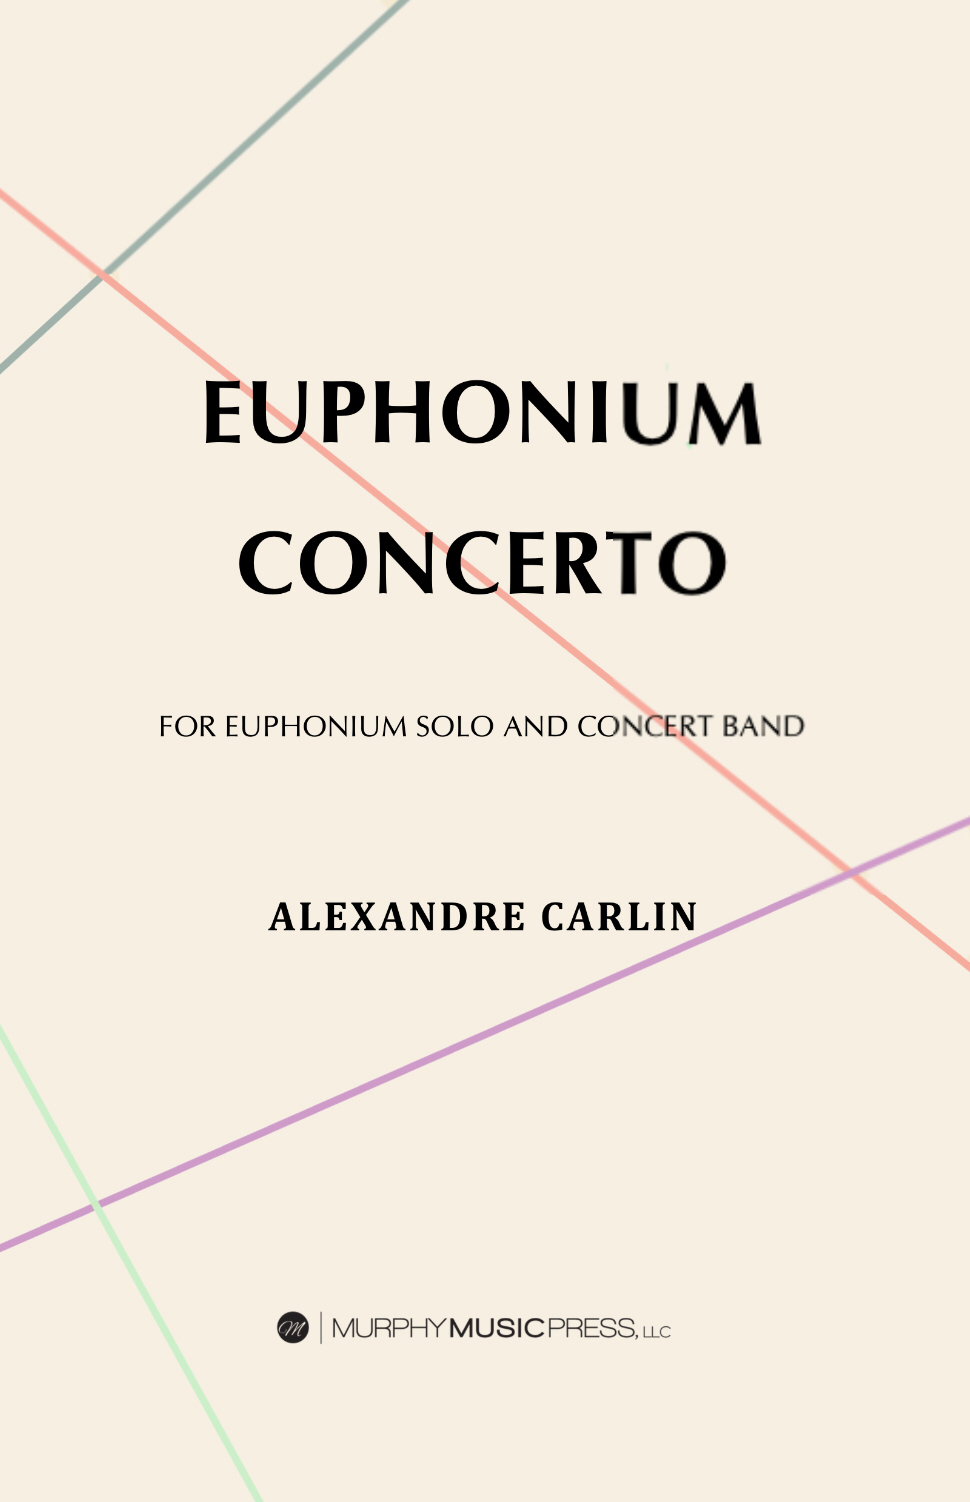 Concerto For Euphonium by Alexandre Carlin